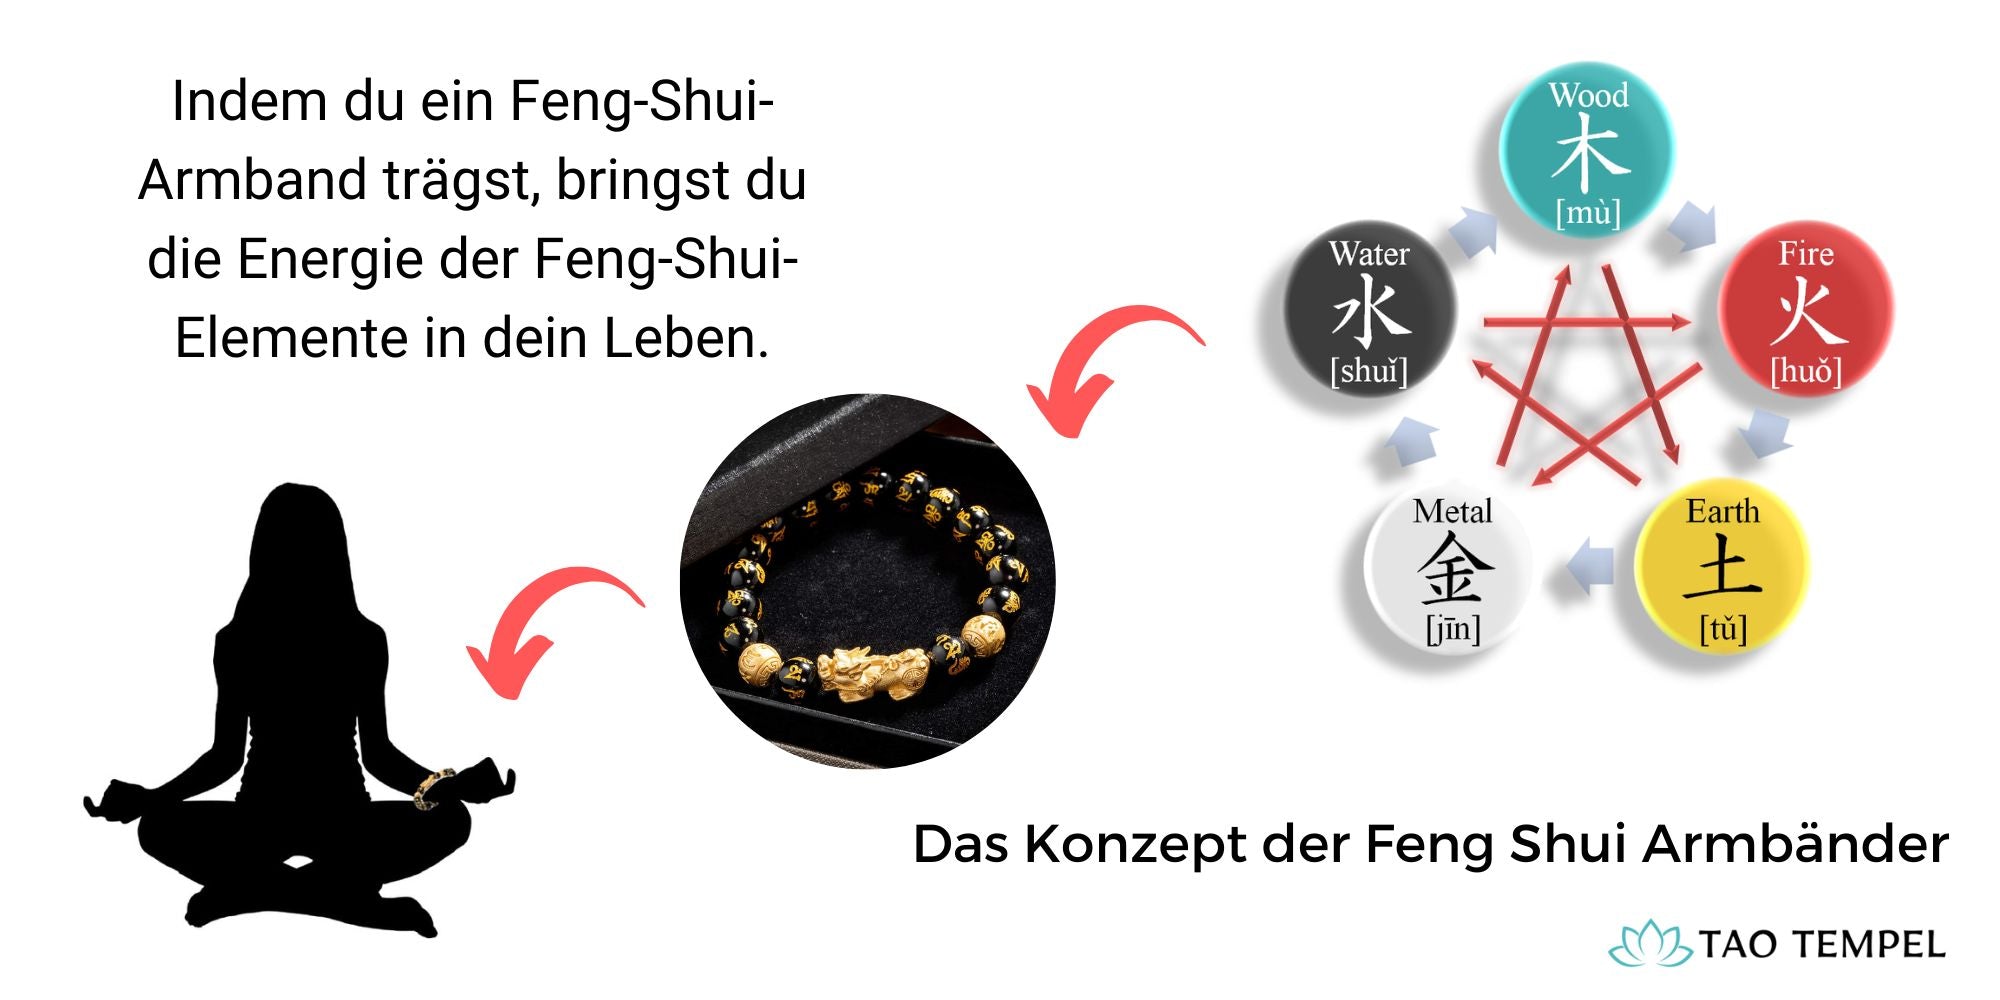 Das Konzept der Feng Shui Armbänder